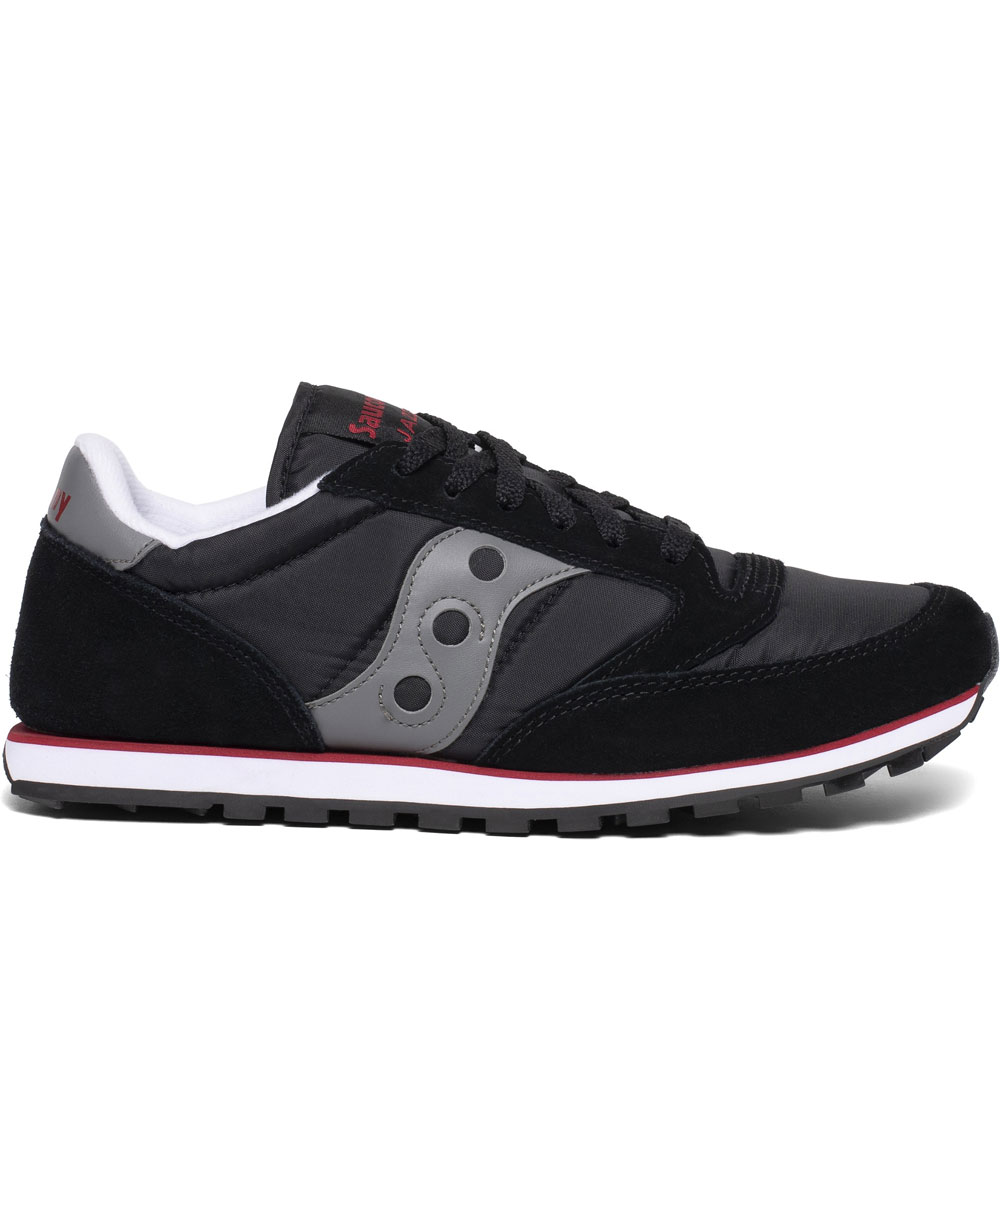 Saucony Jazz Low Pro Zapatos Sneakers para Hombre Black/Grey/Red